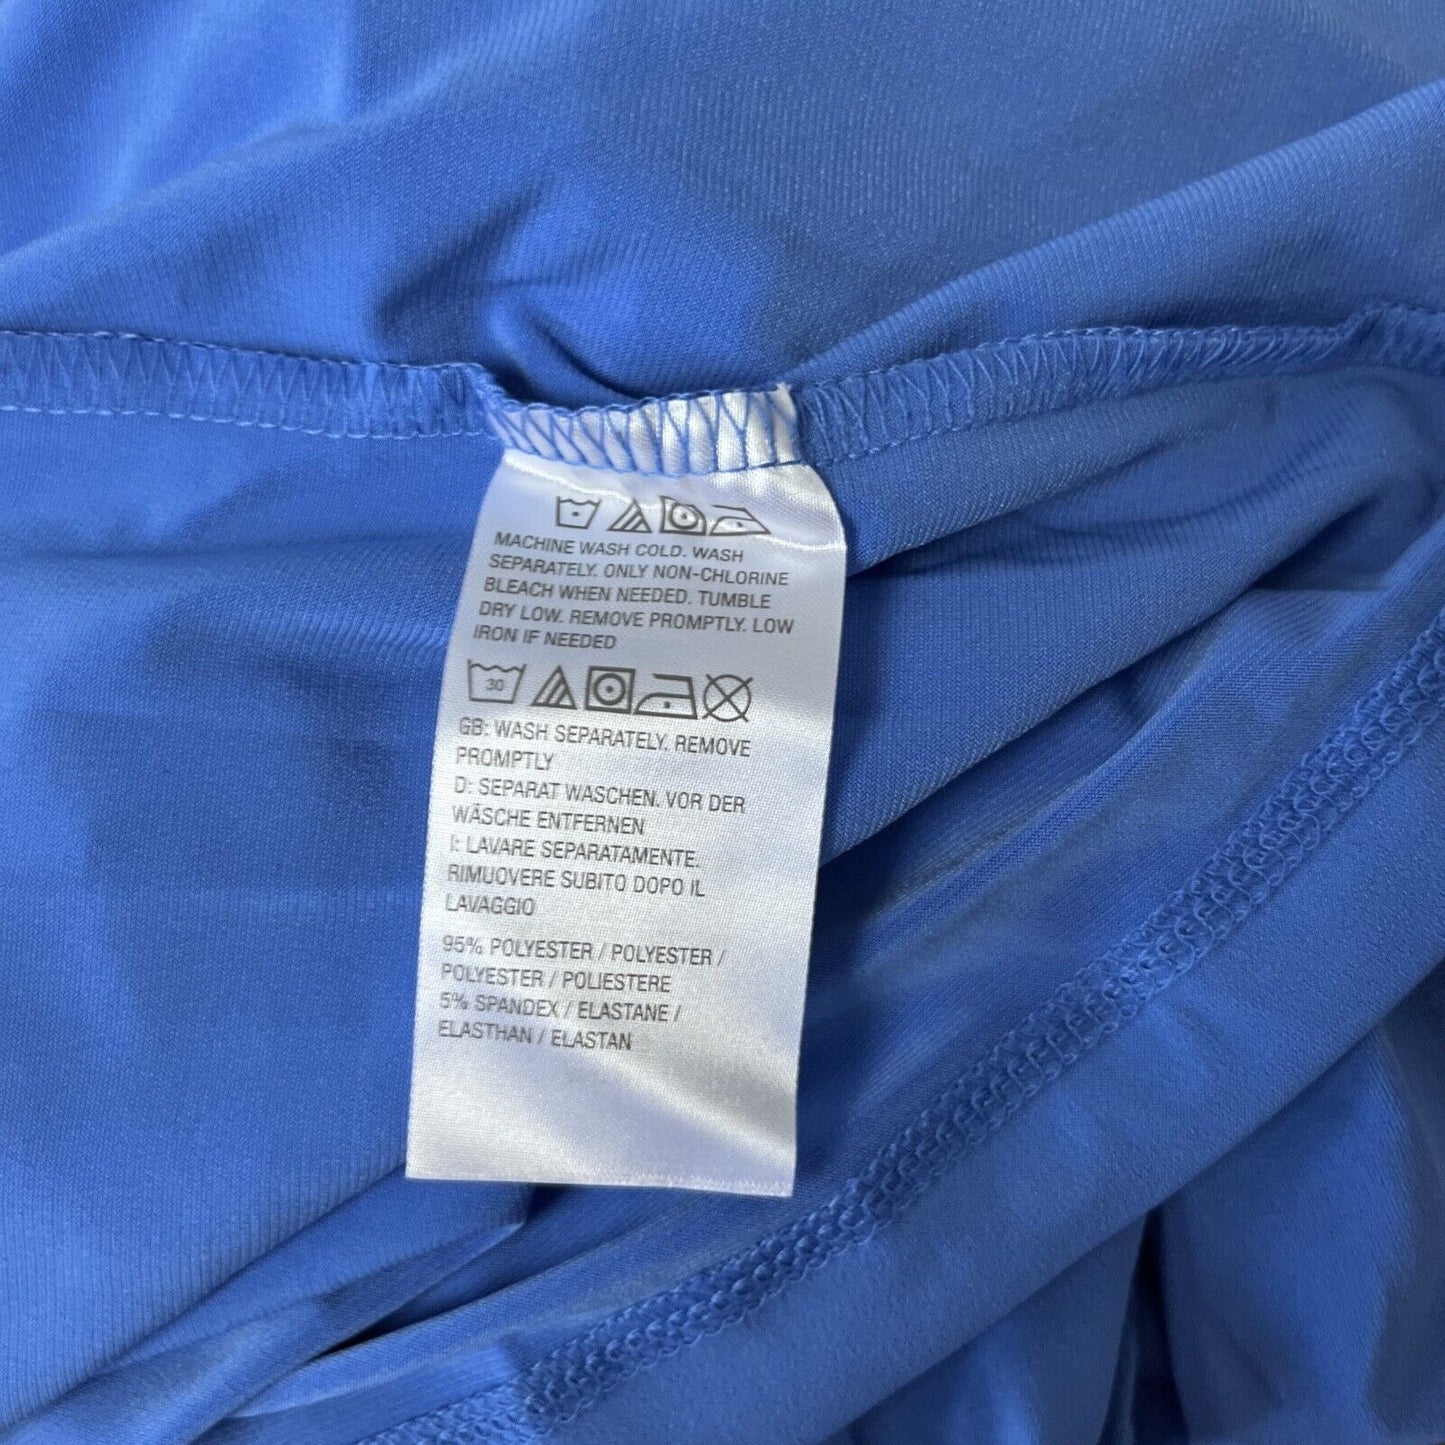 Susan Graver Knit 3/4 Sleeve Top With Back Lattice Detail (Blue Tide, M) A501351